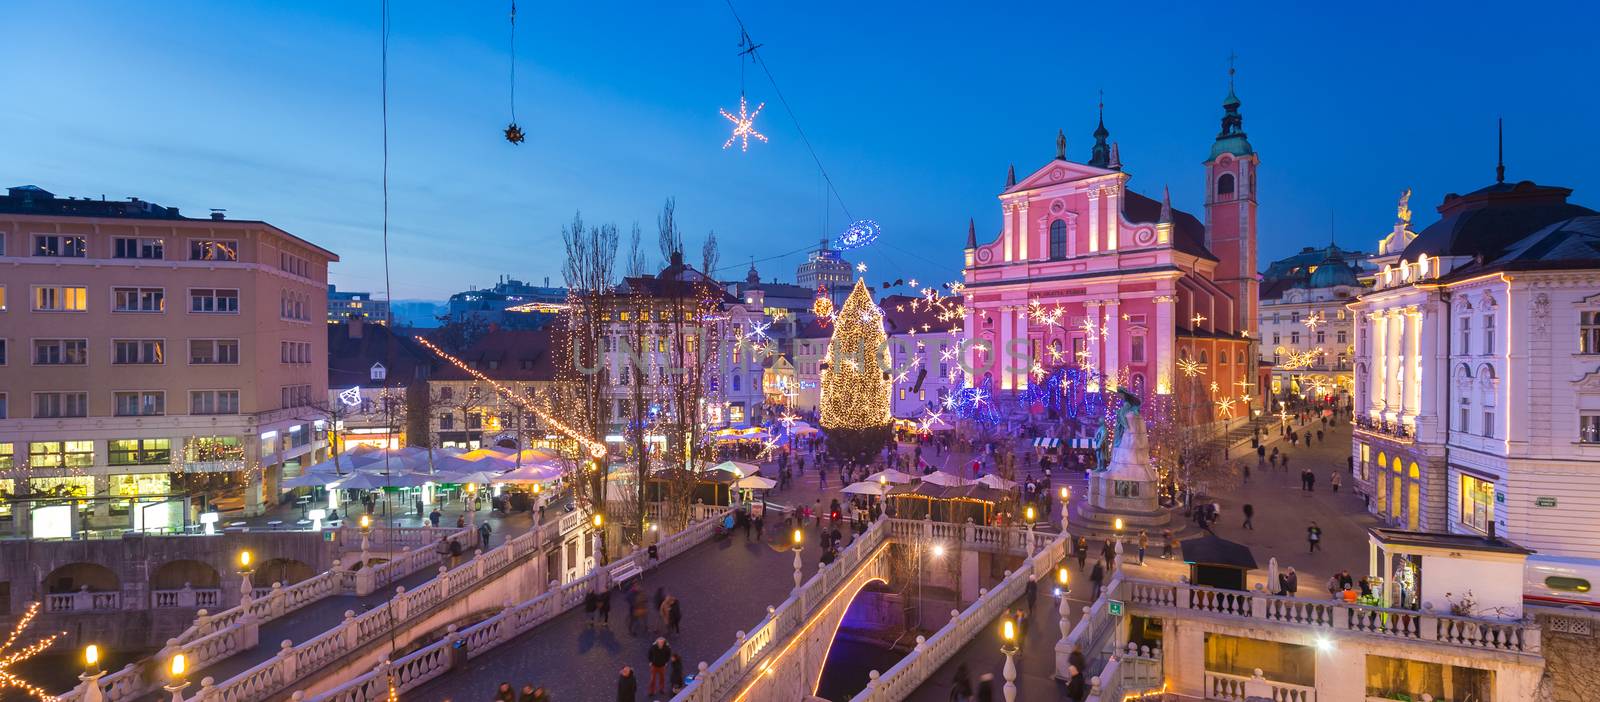 Romantic Ljubljana's city center decorated for Christmas holiday. Preseren's square, Ljubljana, Slovenia, Europe. Panoramic view.